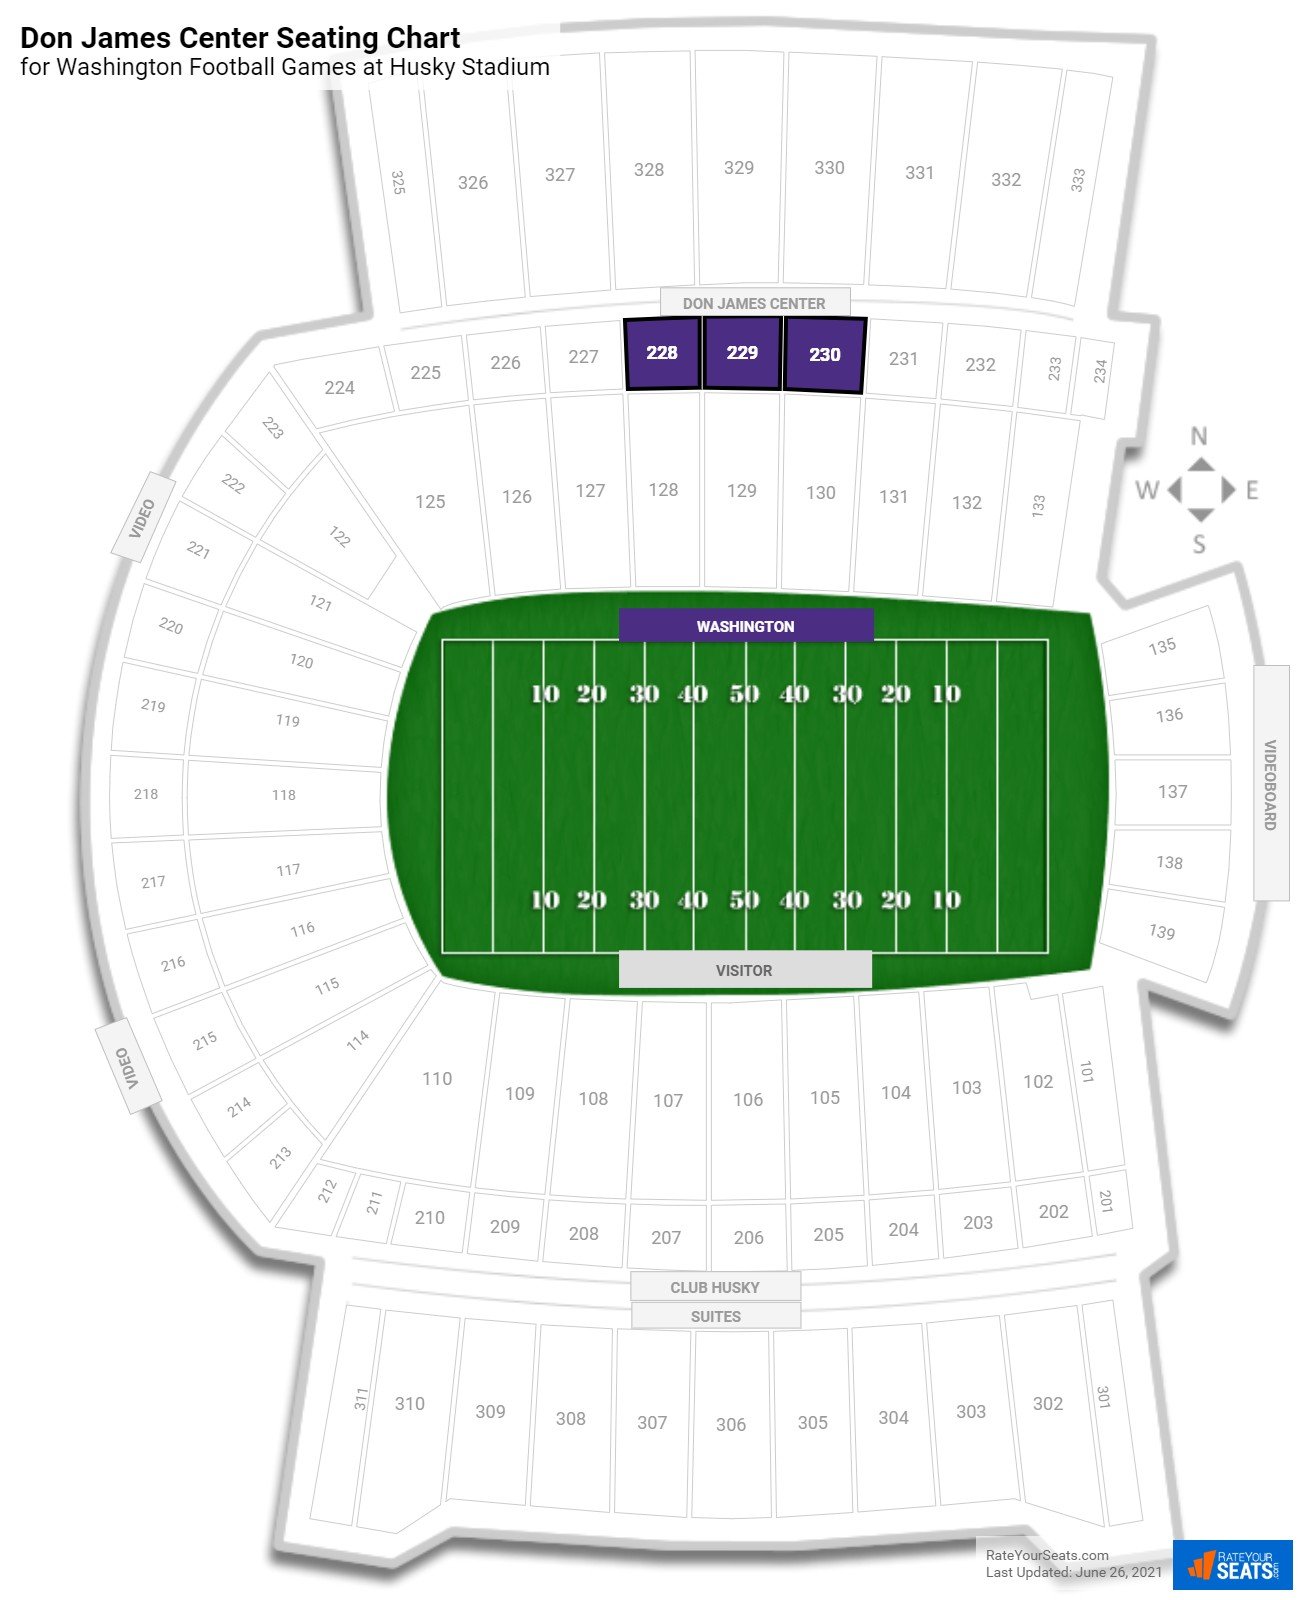 Washington Don James Center Seating Chart at Husky Stadium